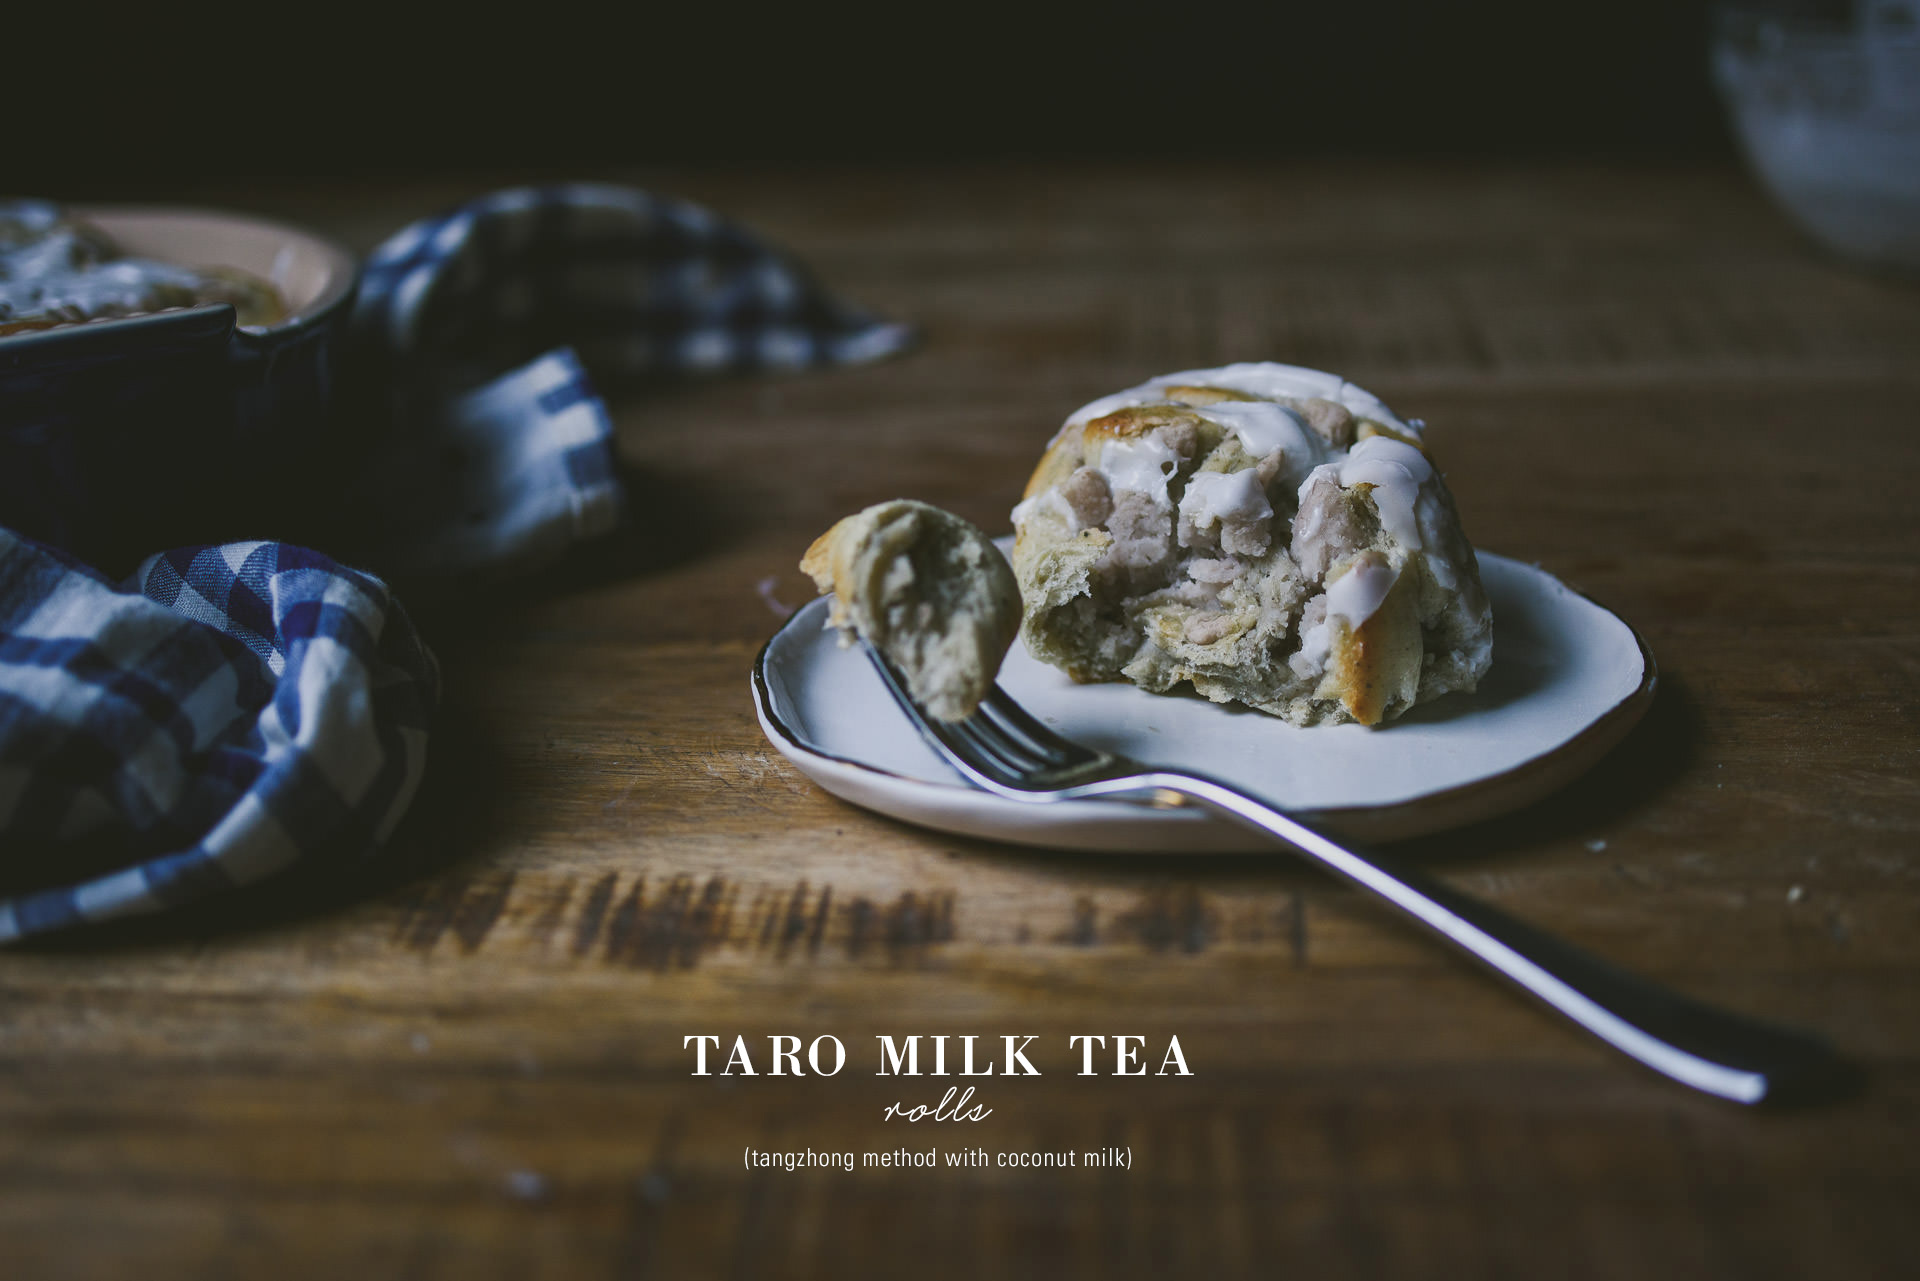 Taro-Milk-Tea-Roll - le jus d